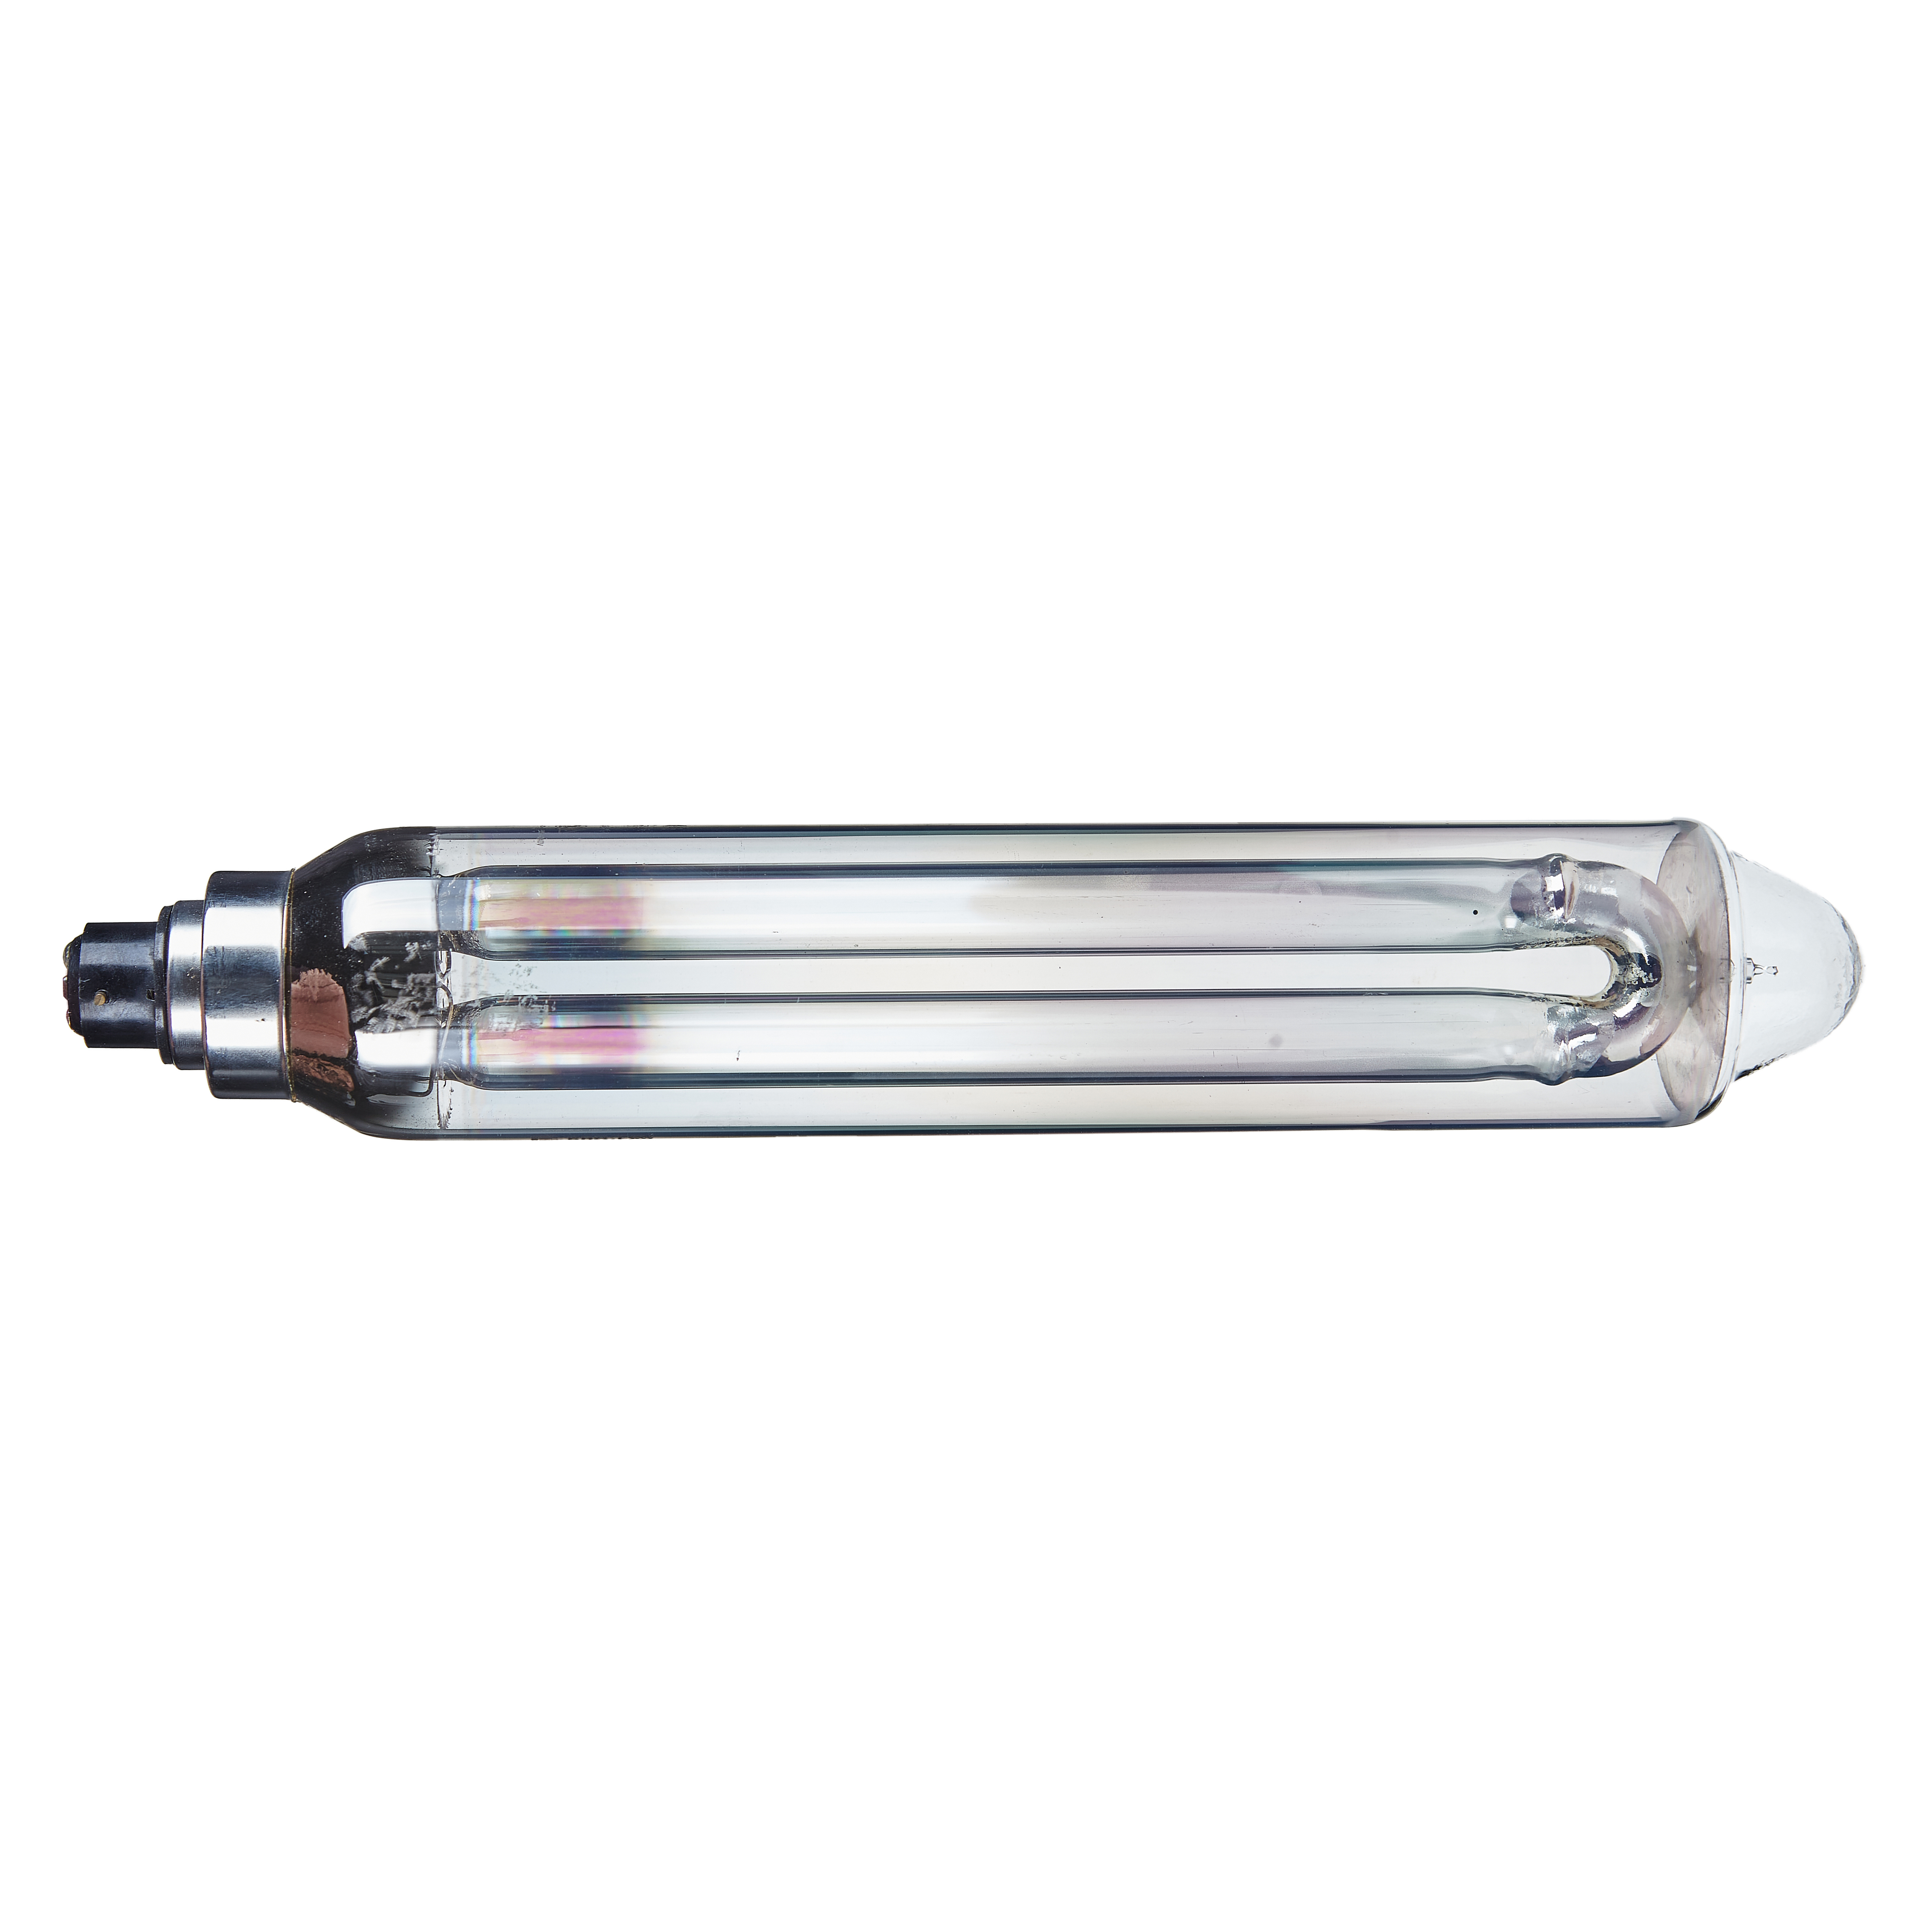 SOX-E 36W Low-pressure sodium lamps